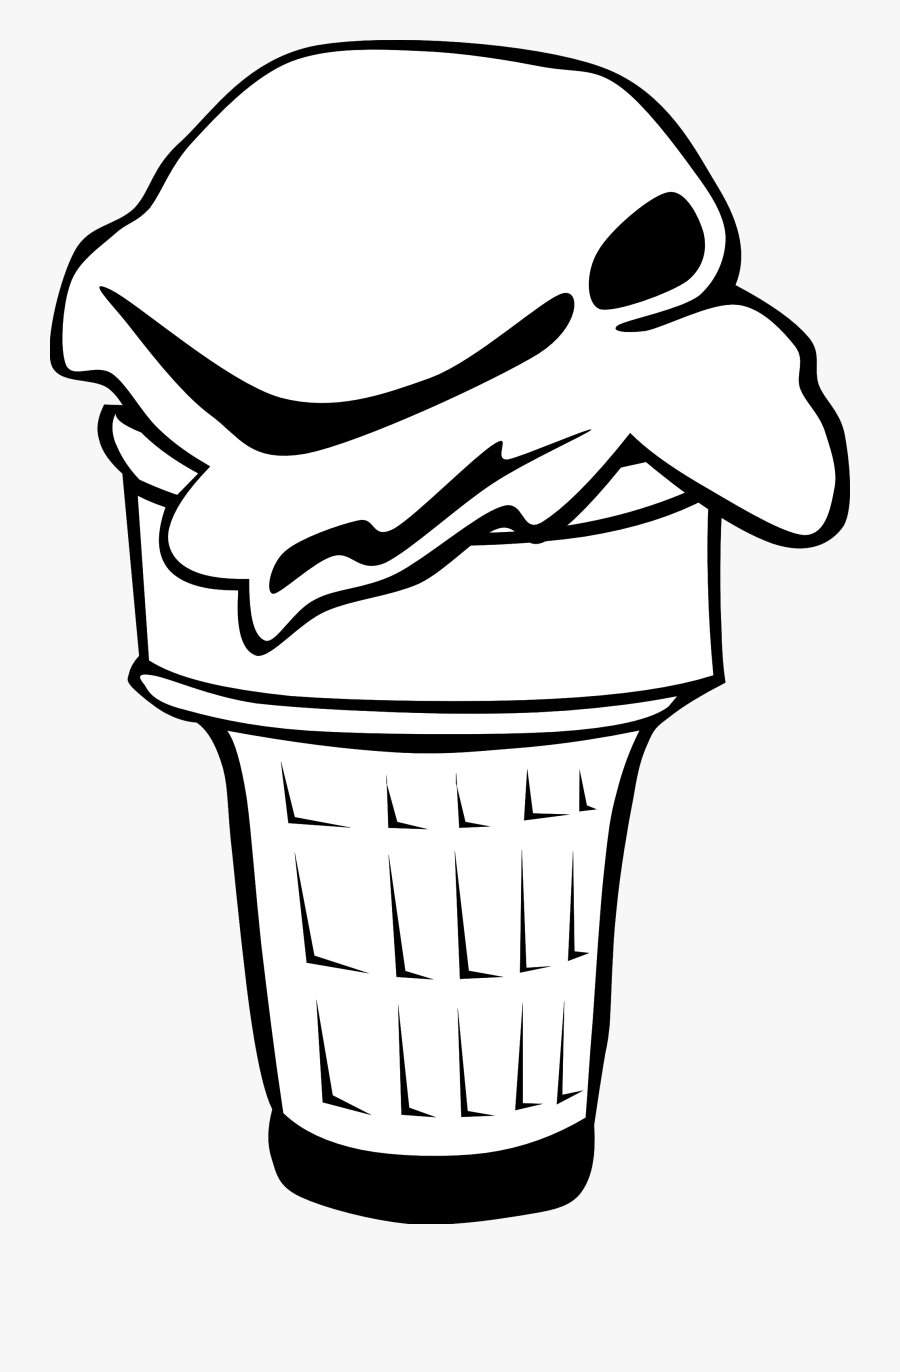 Black And White Ice Cream Cone Clipart - Ice Cream Cone Clip Art, Transparent Clipart